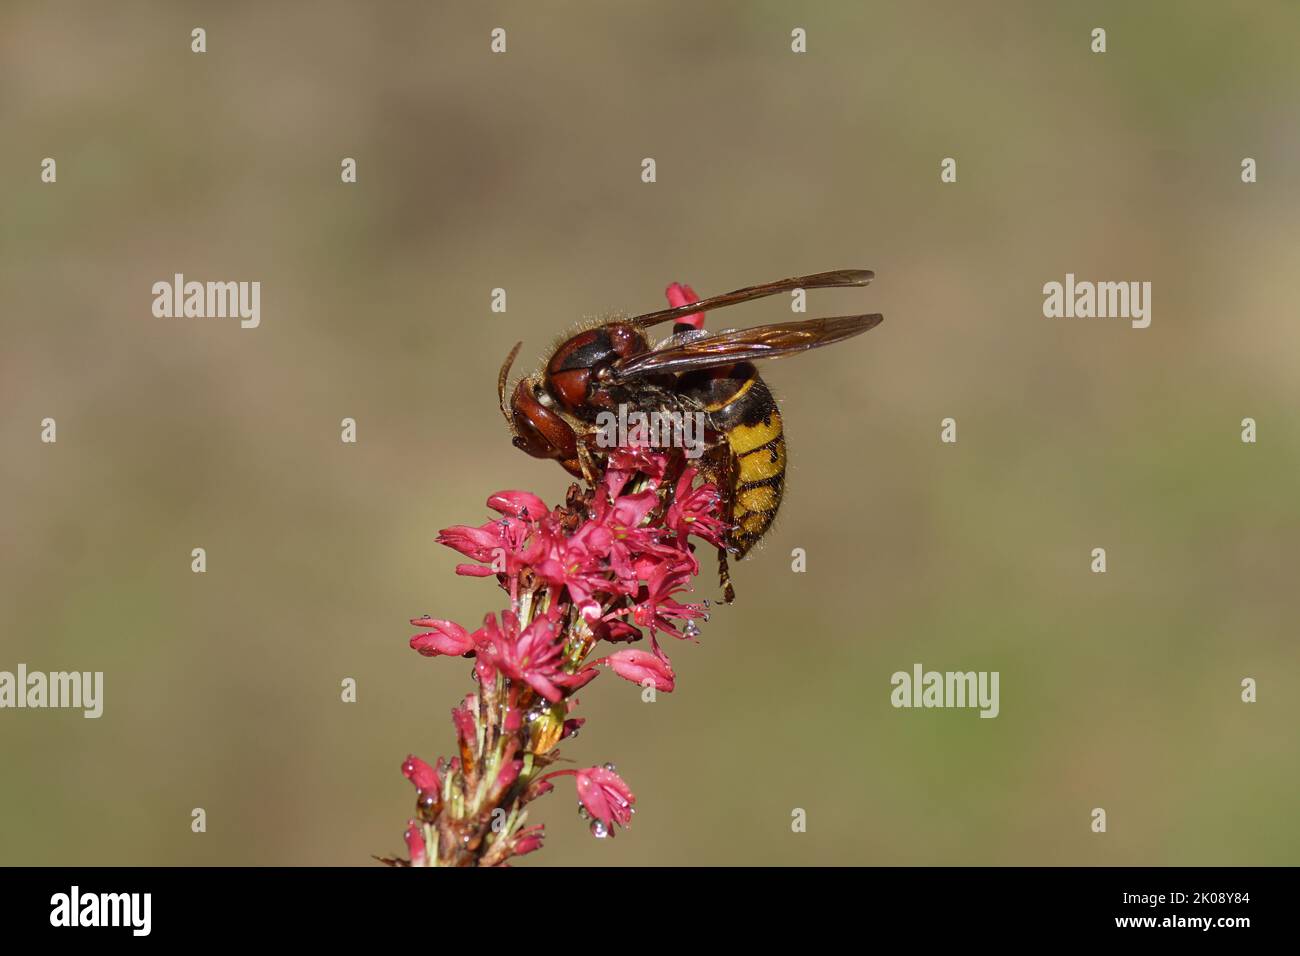 European hornet (Vespa crabro) of the family Vespidae). On flowers of Knotweed, knotgrass (Polygonum amplexicaule), family Buckwheat (Polygonaceae). Stock Photo